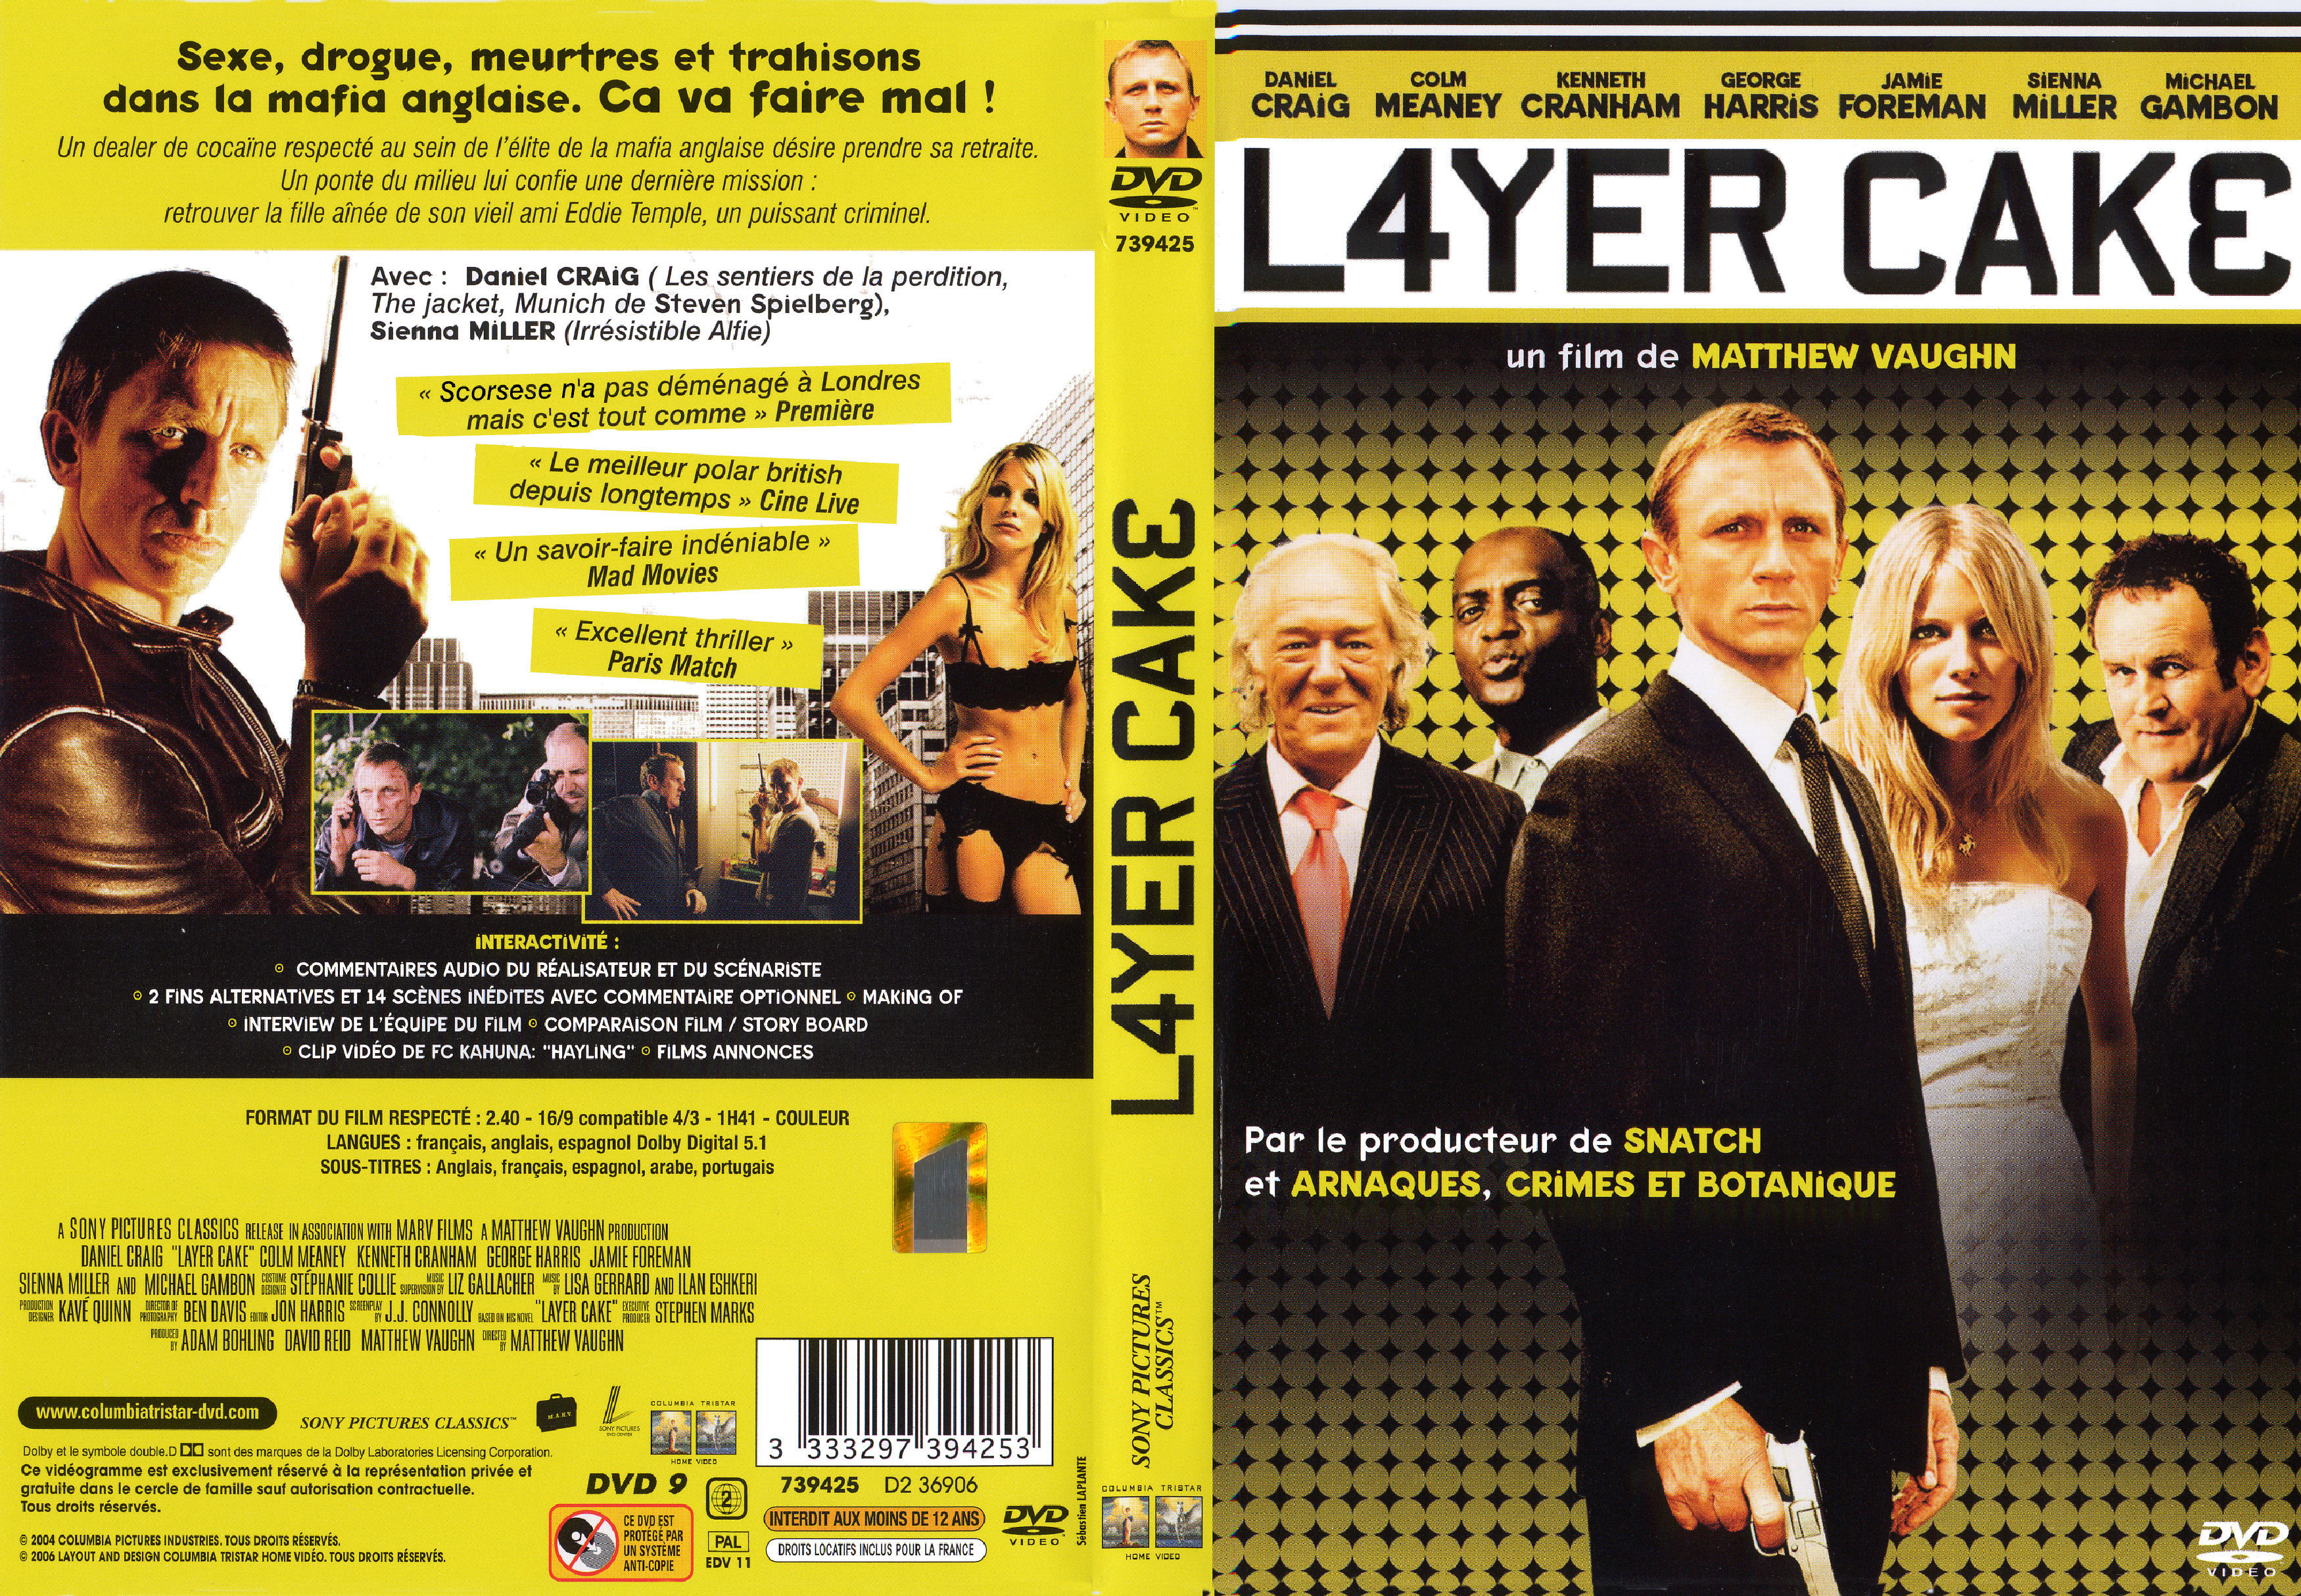 Jaquette DVD Layer cake v2